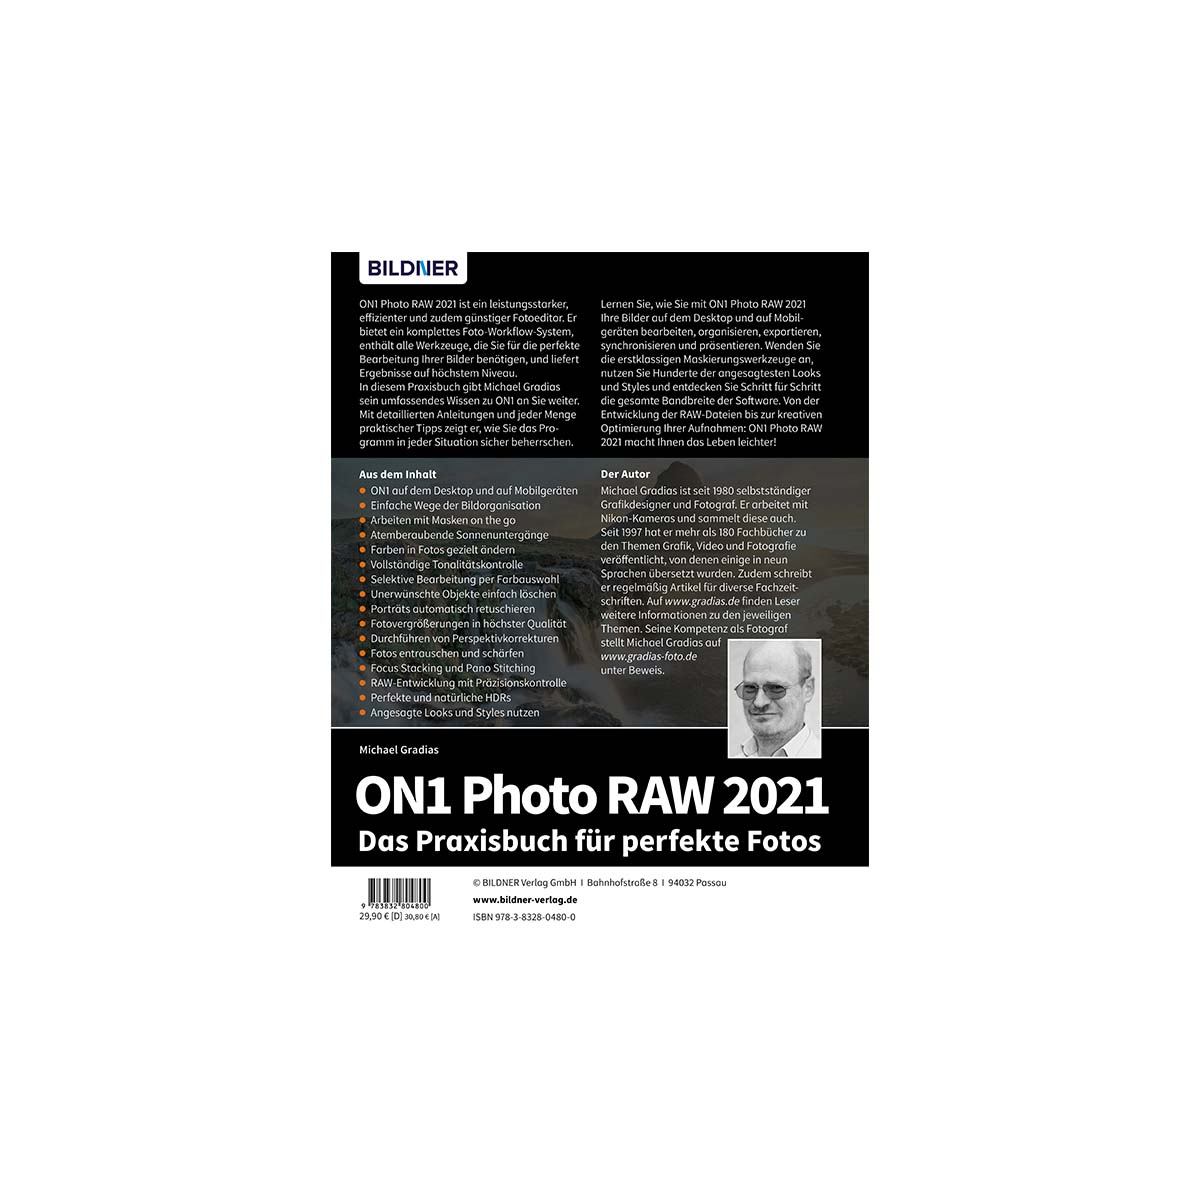 perfekte für Photo Praxisbuch ON1 2021 RAW - Das Fotos